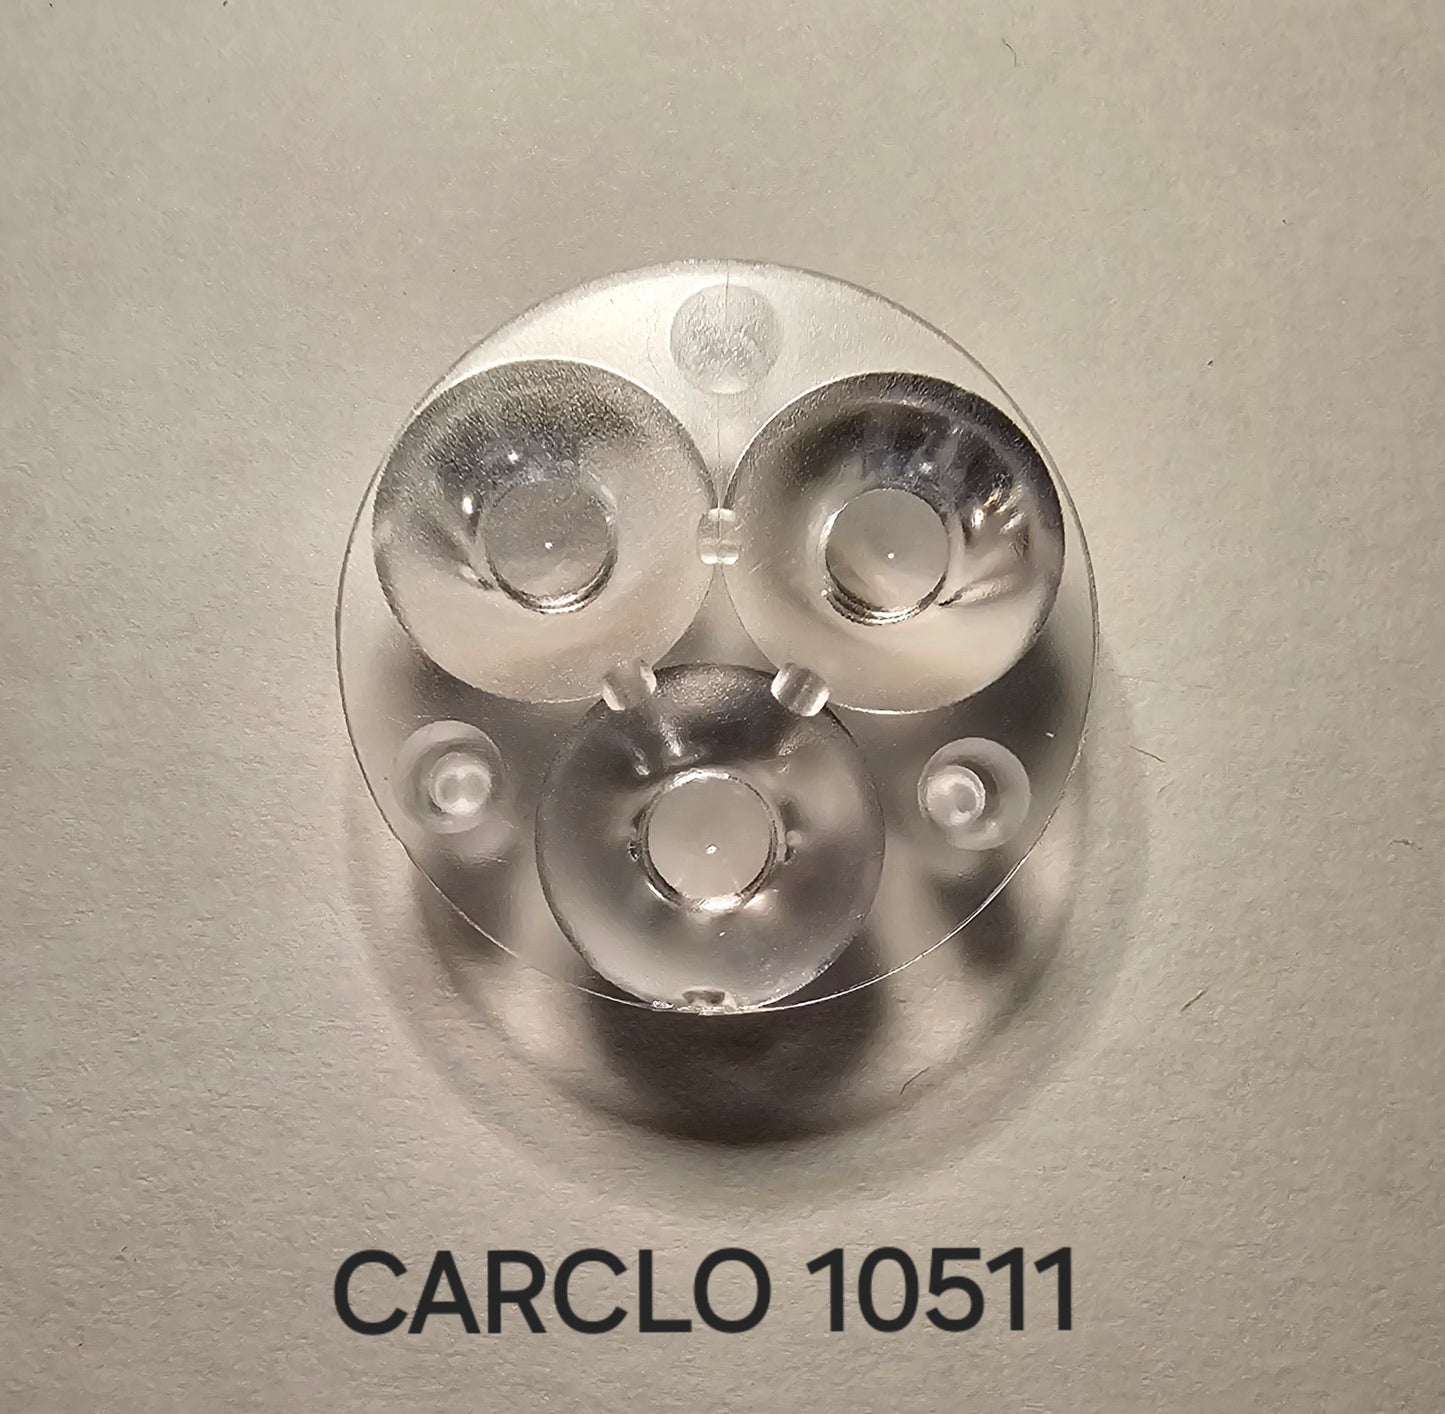 CARCLO 105XX TRIPLE TIR LENS/OPTICS